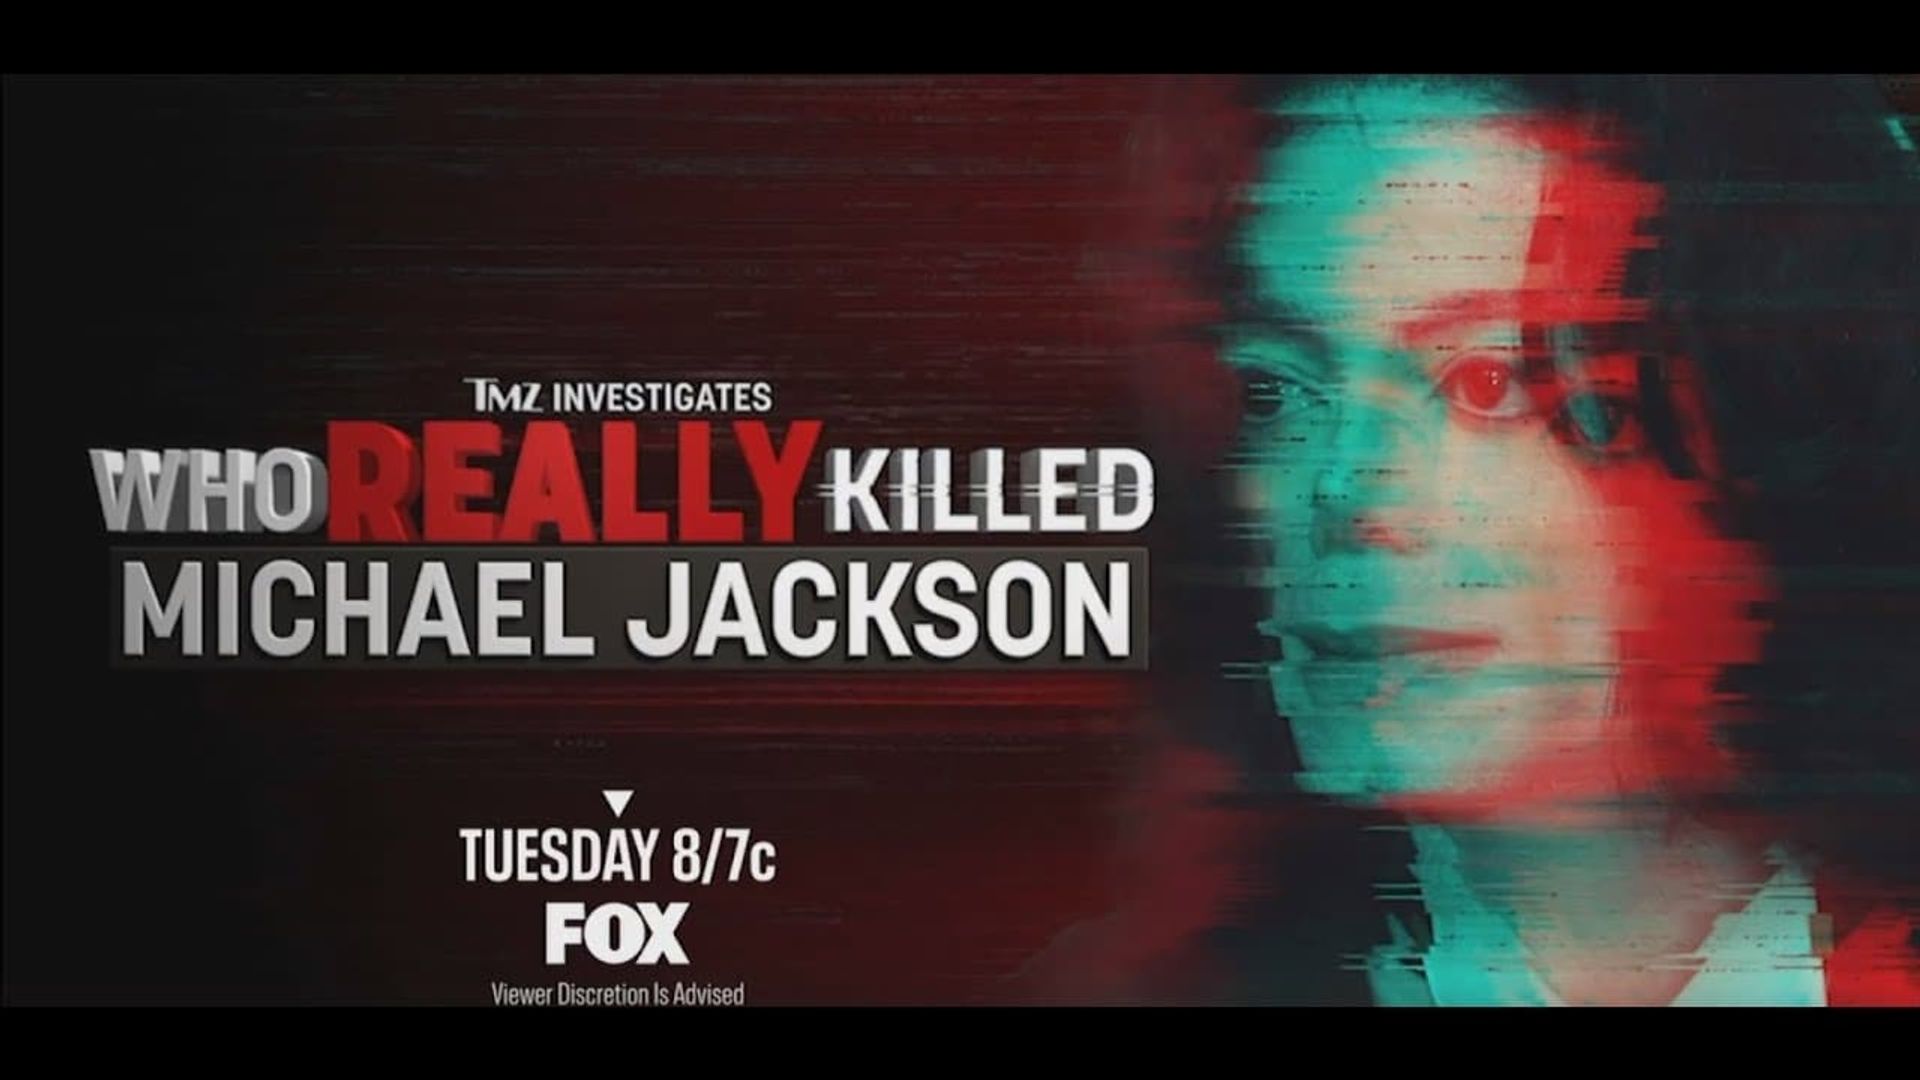 TMZ Investigates: Who Really Killed Michael Jackson background